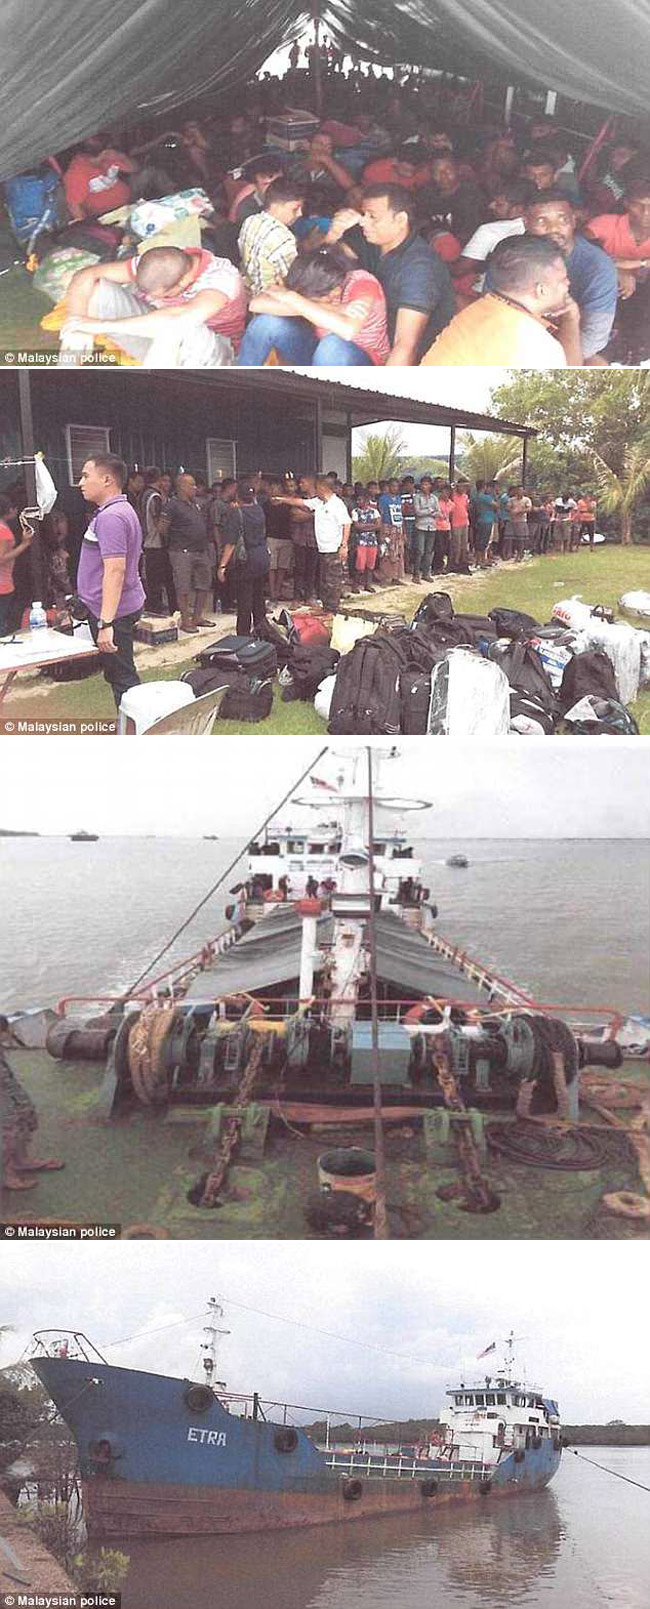 1525581175 malaysia police sri lankan refugees tanker